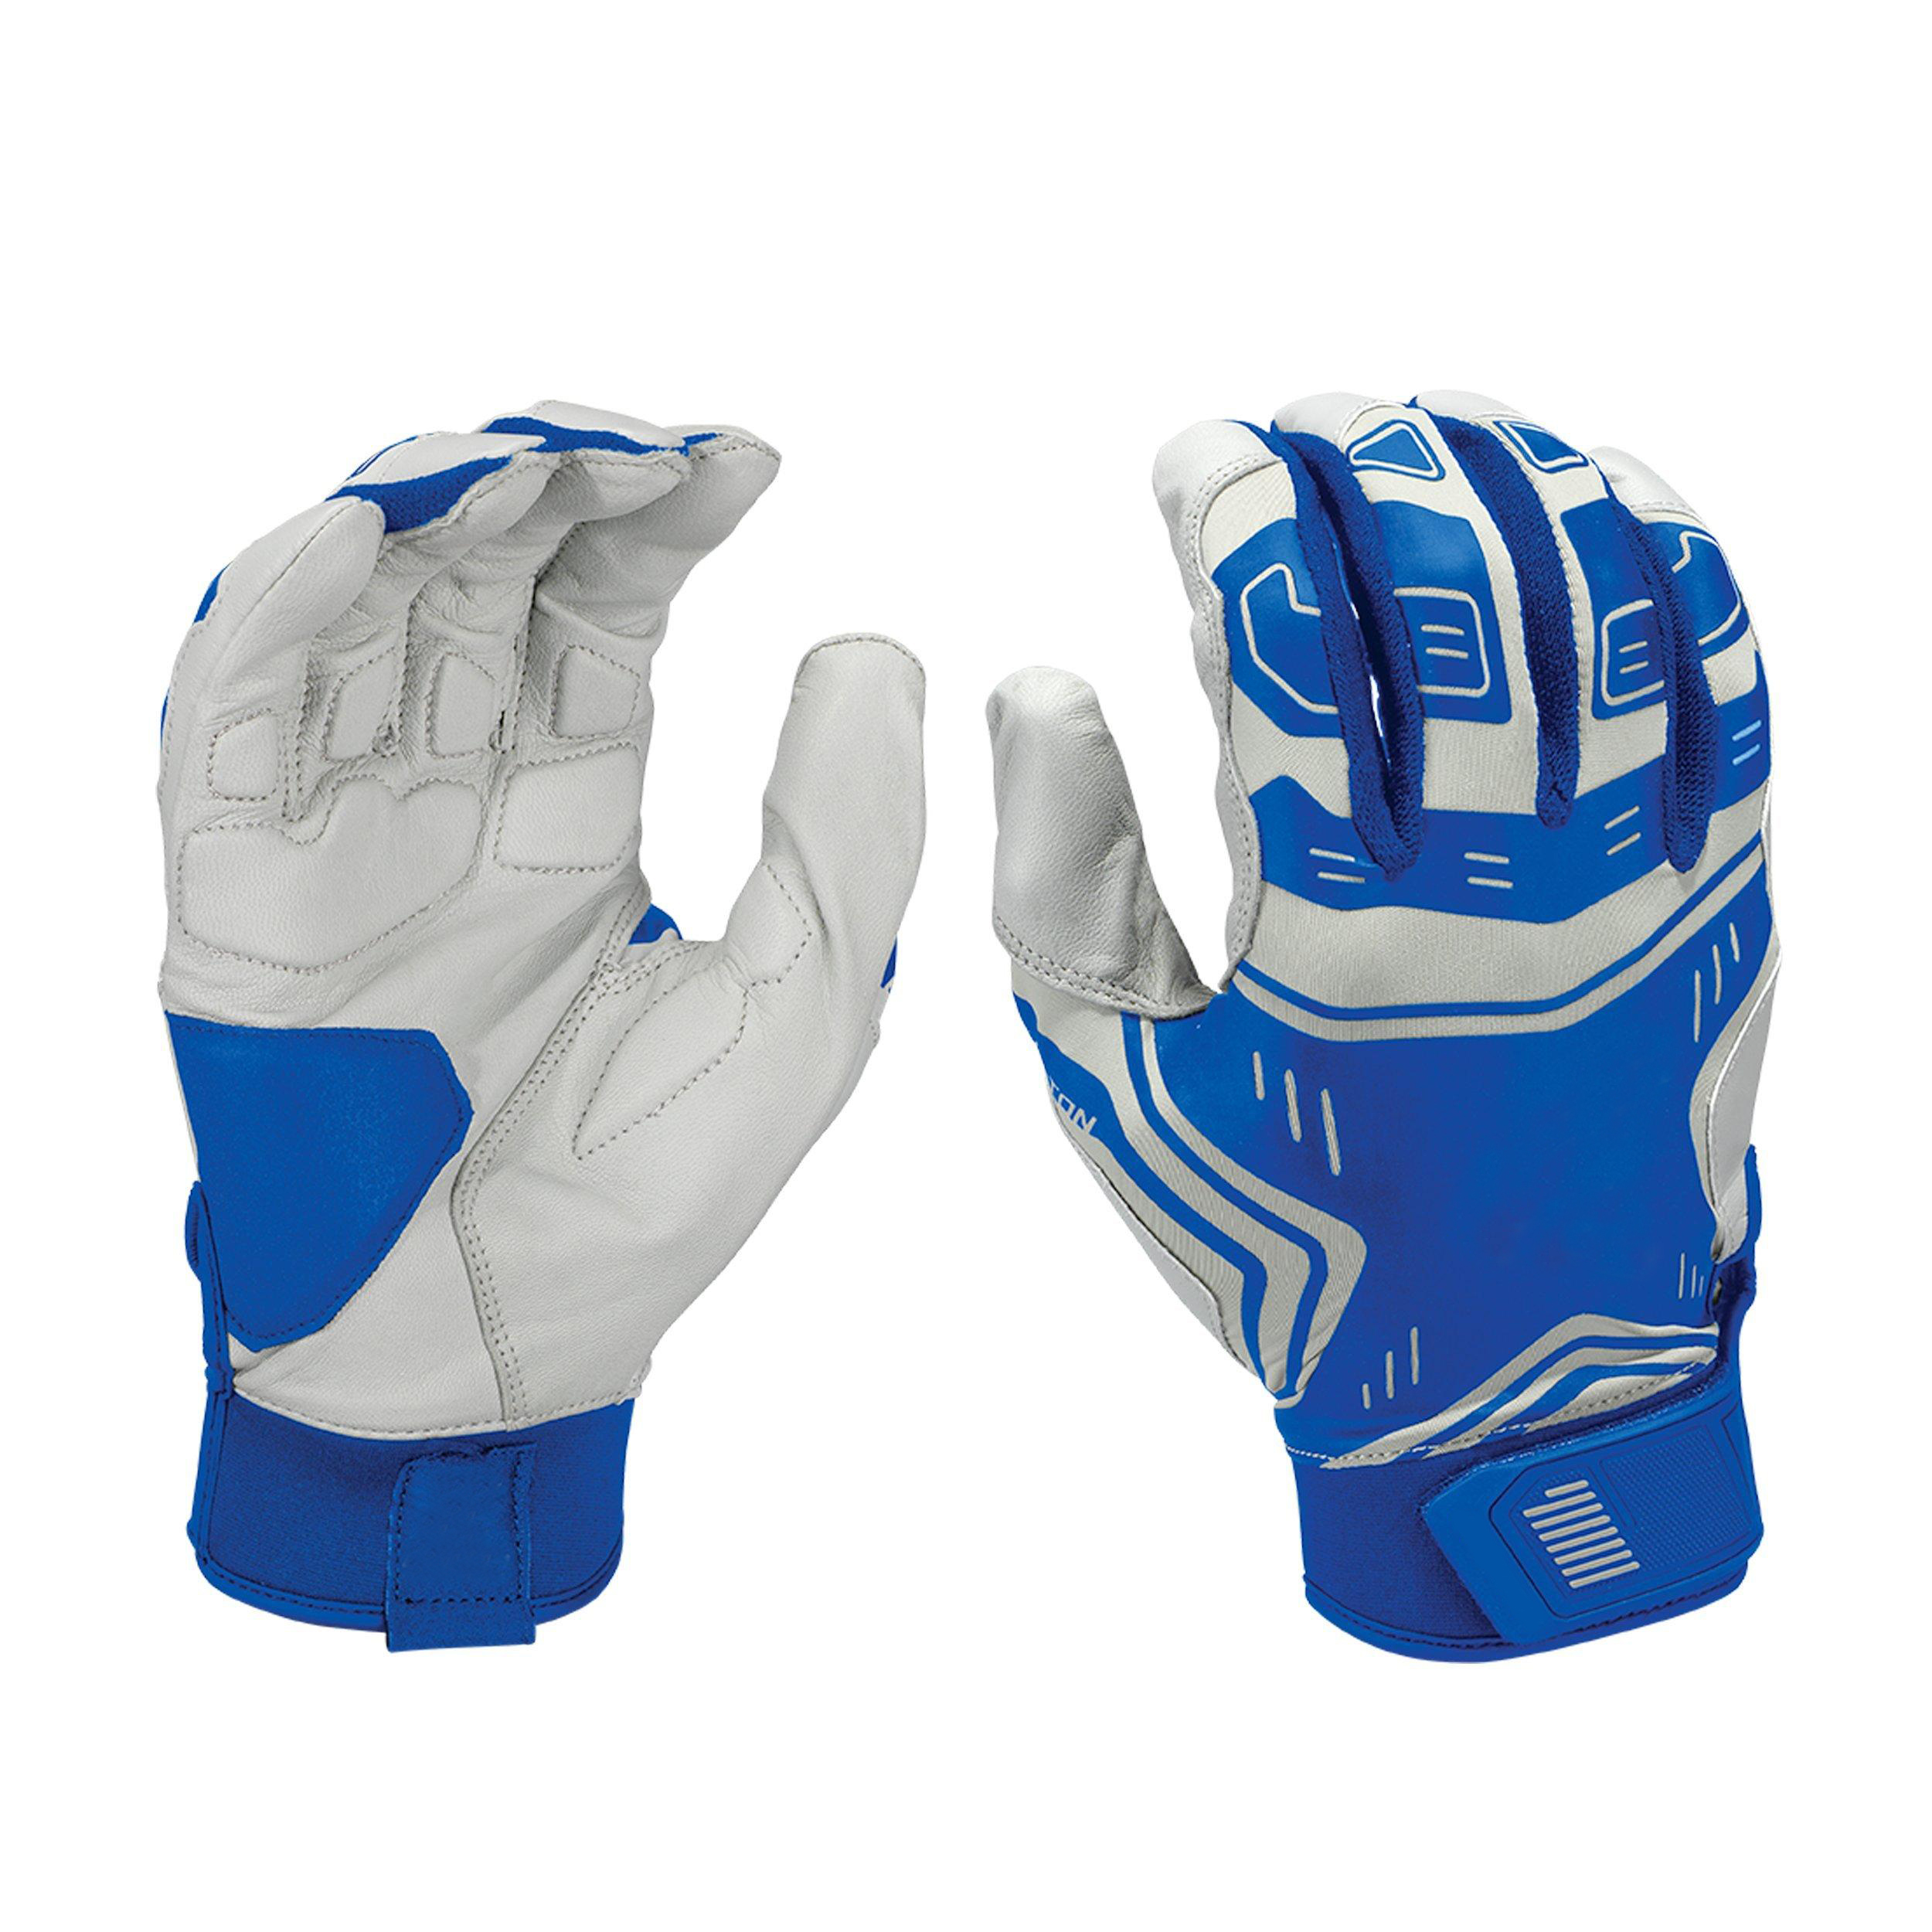 Adult batting gloves royal blue baseball batting gloves goat leather